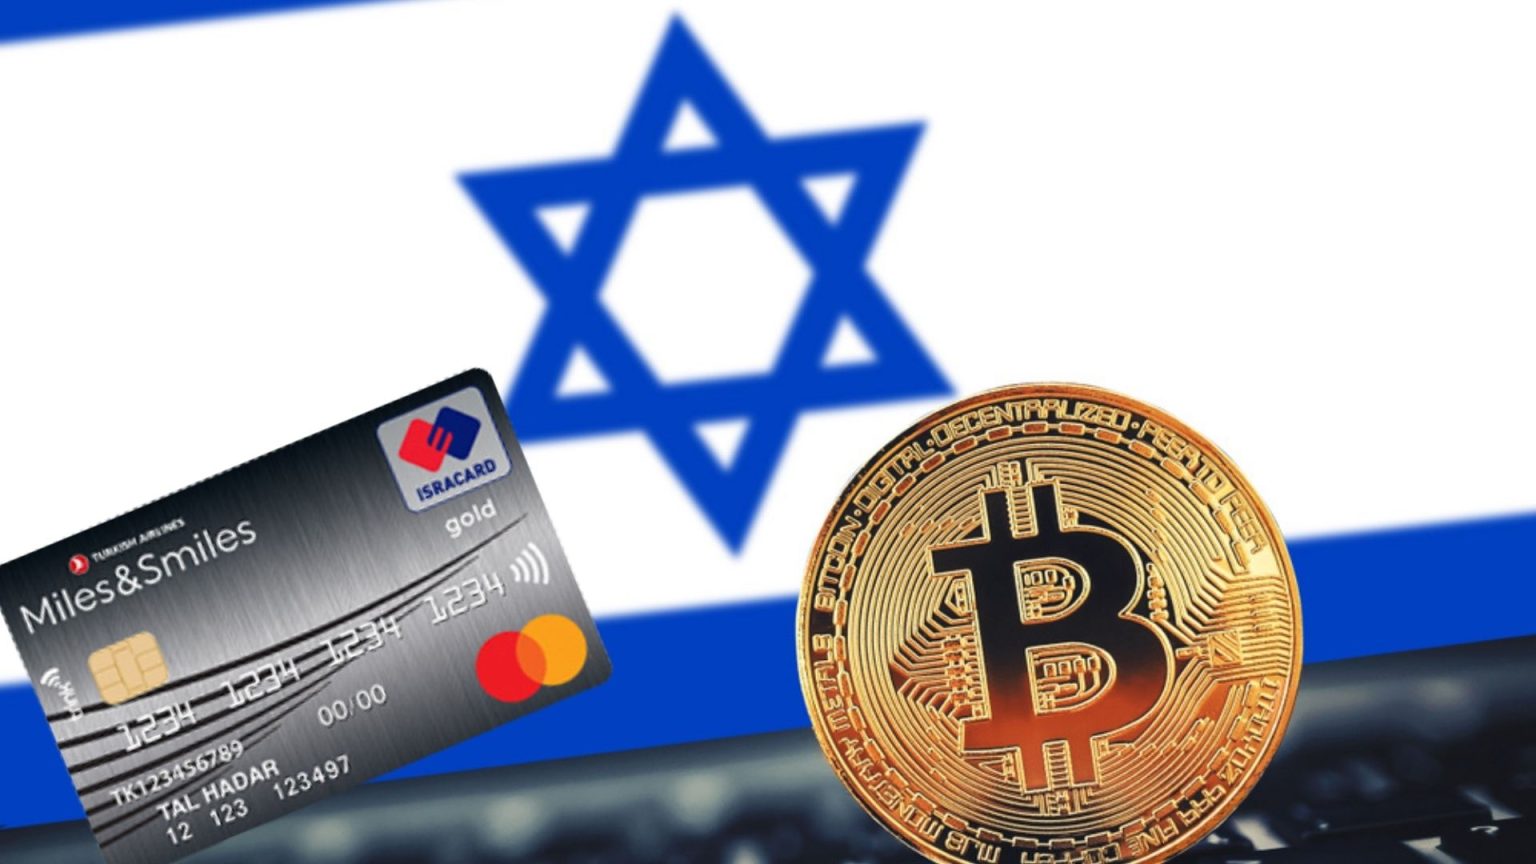 israel-bitcoin-card-1536x864.jpg